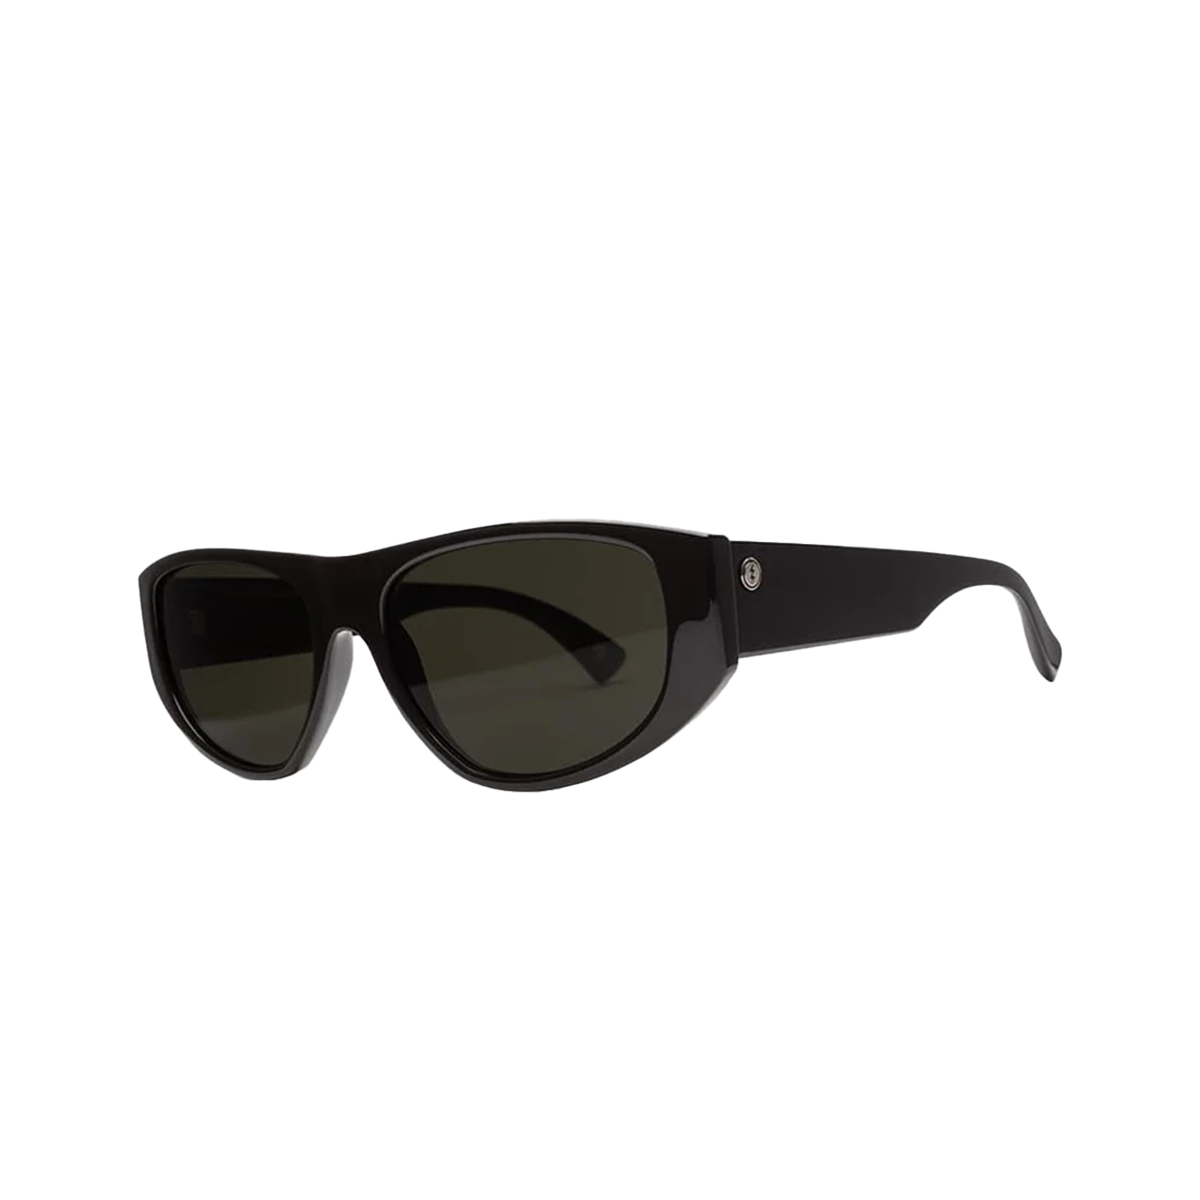 Electric Stanton Sunglasses - Gloss Black/ Grey Polarized